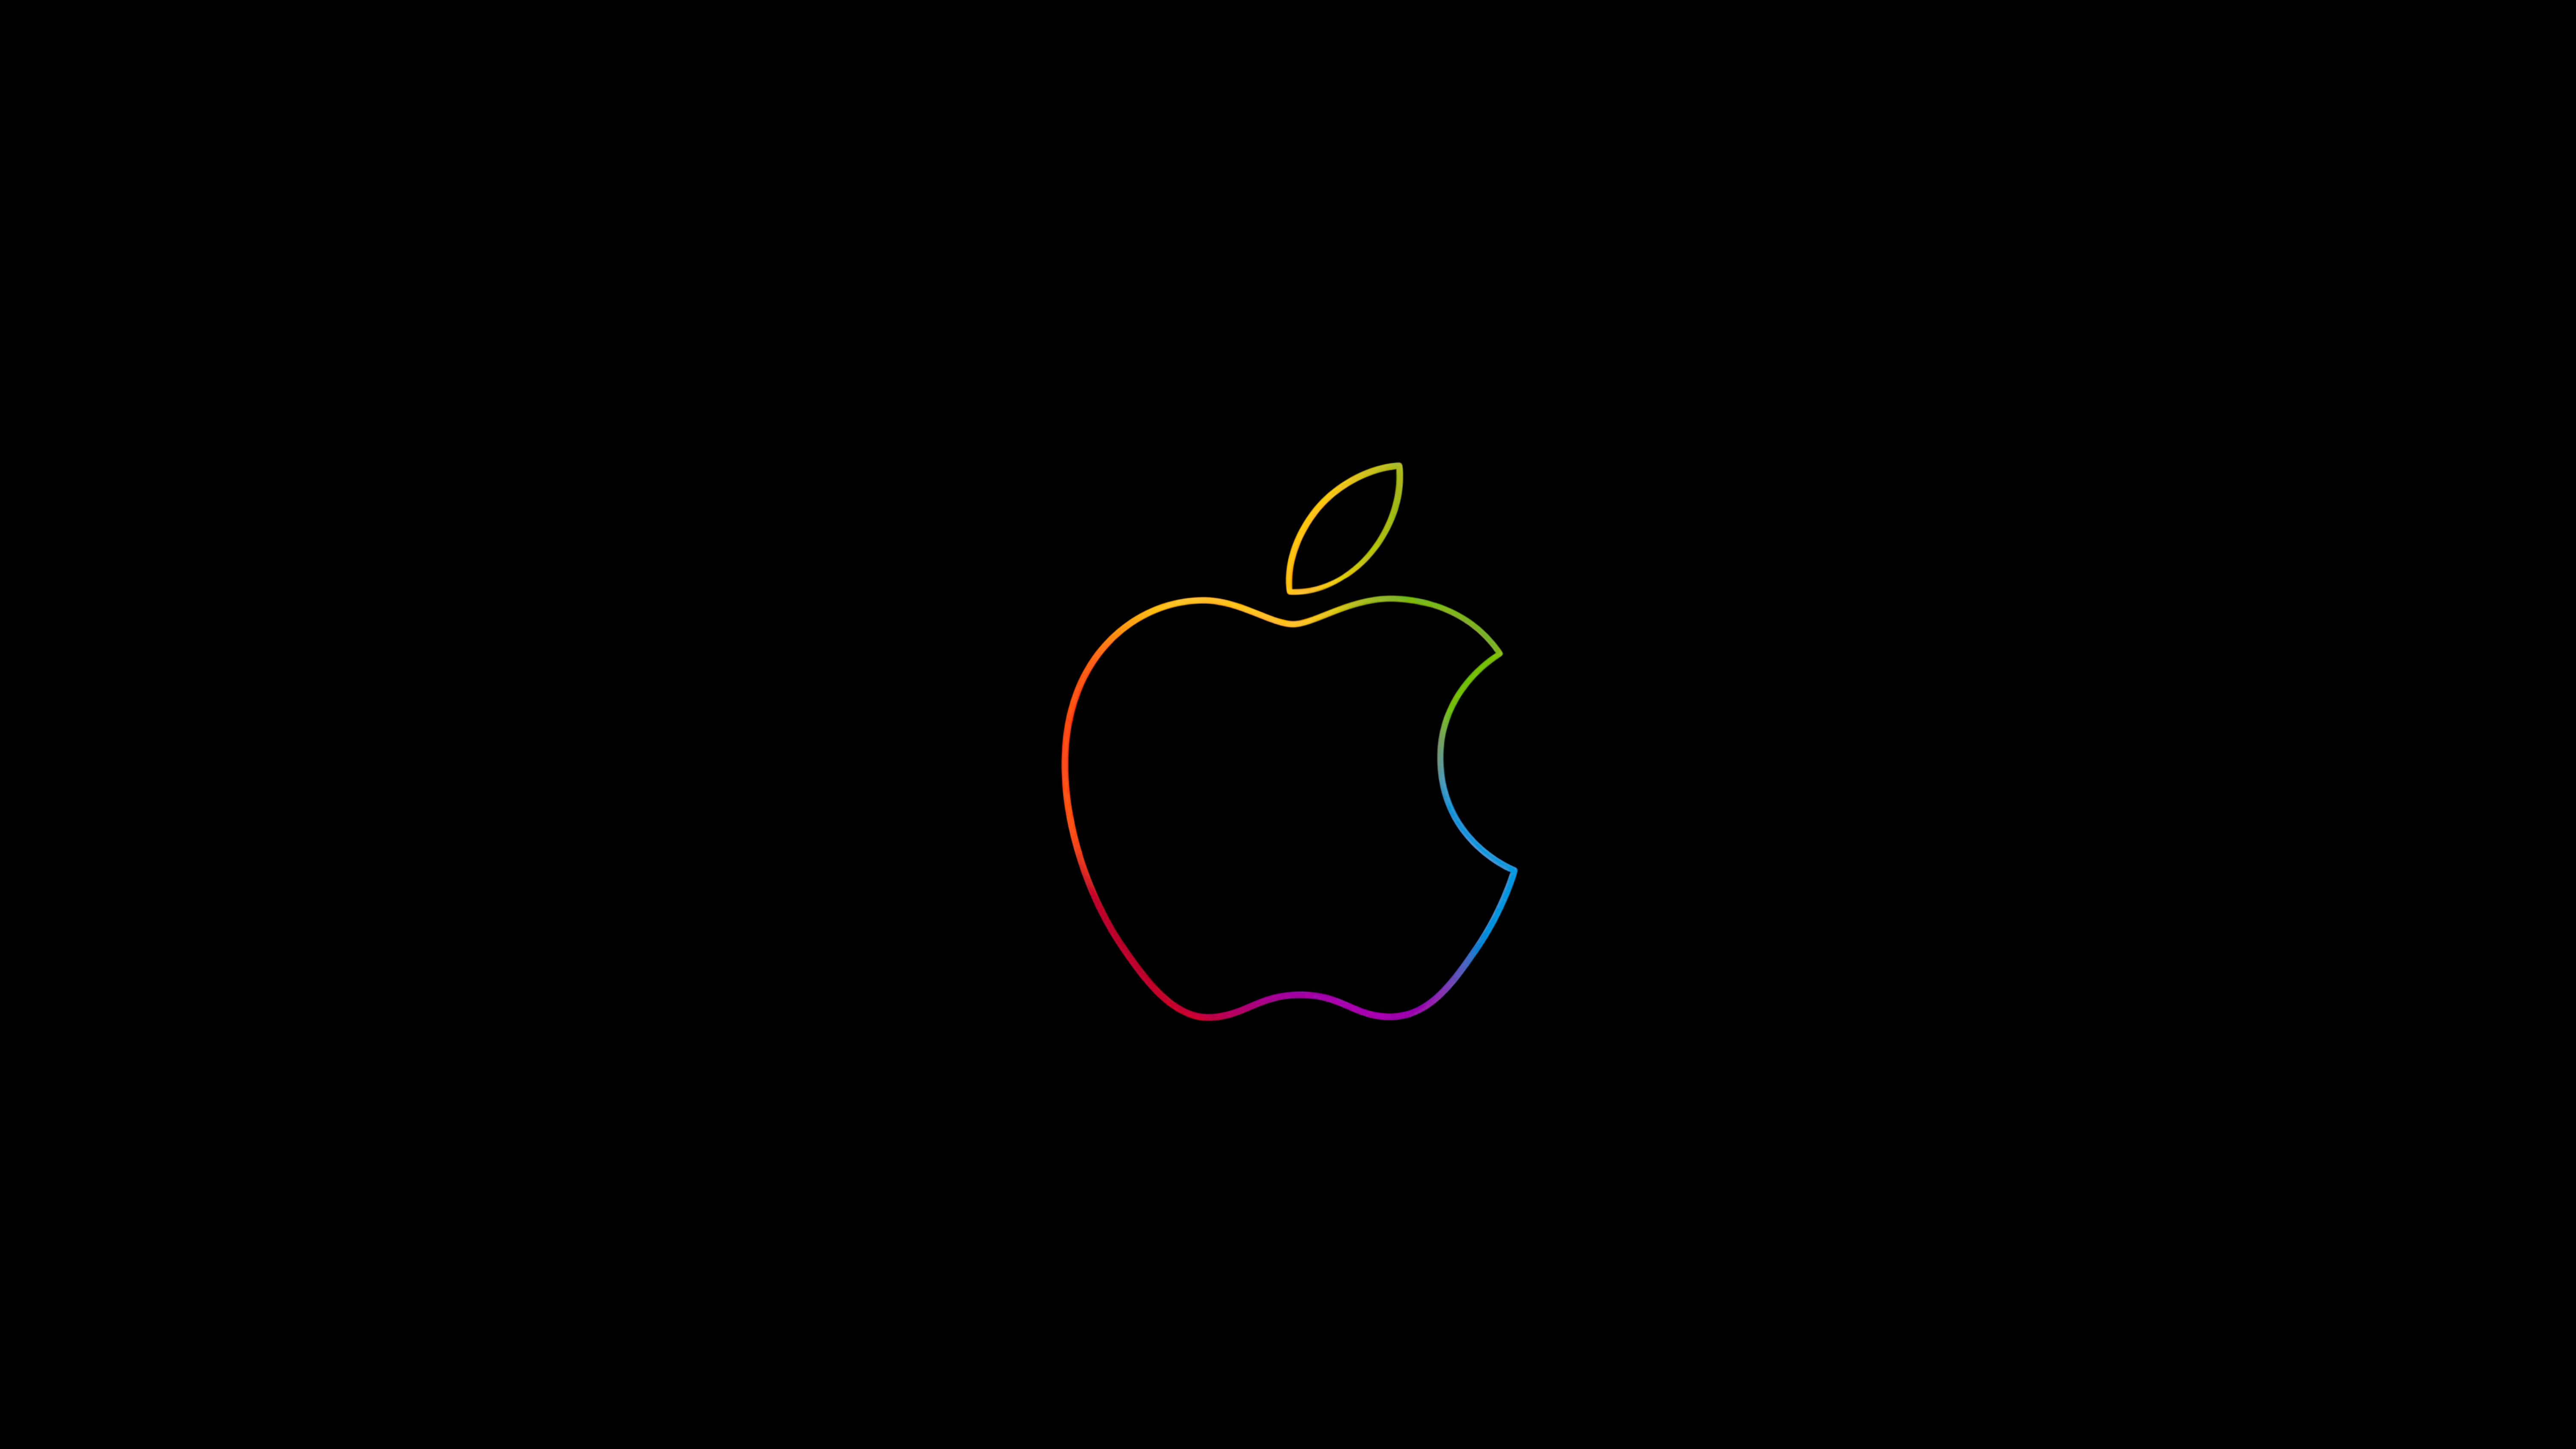 Top 999+ Apple Logo 4k Wallpaper Full HD, 4K✓Free to Use